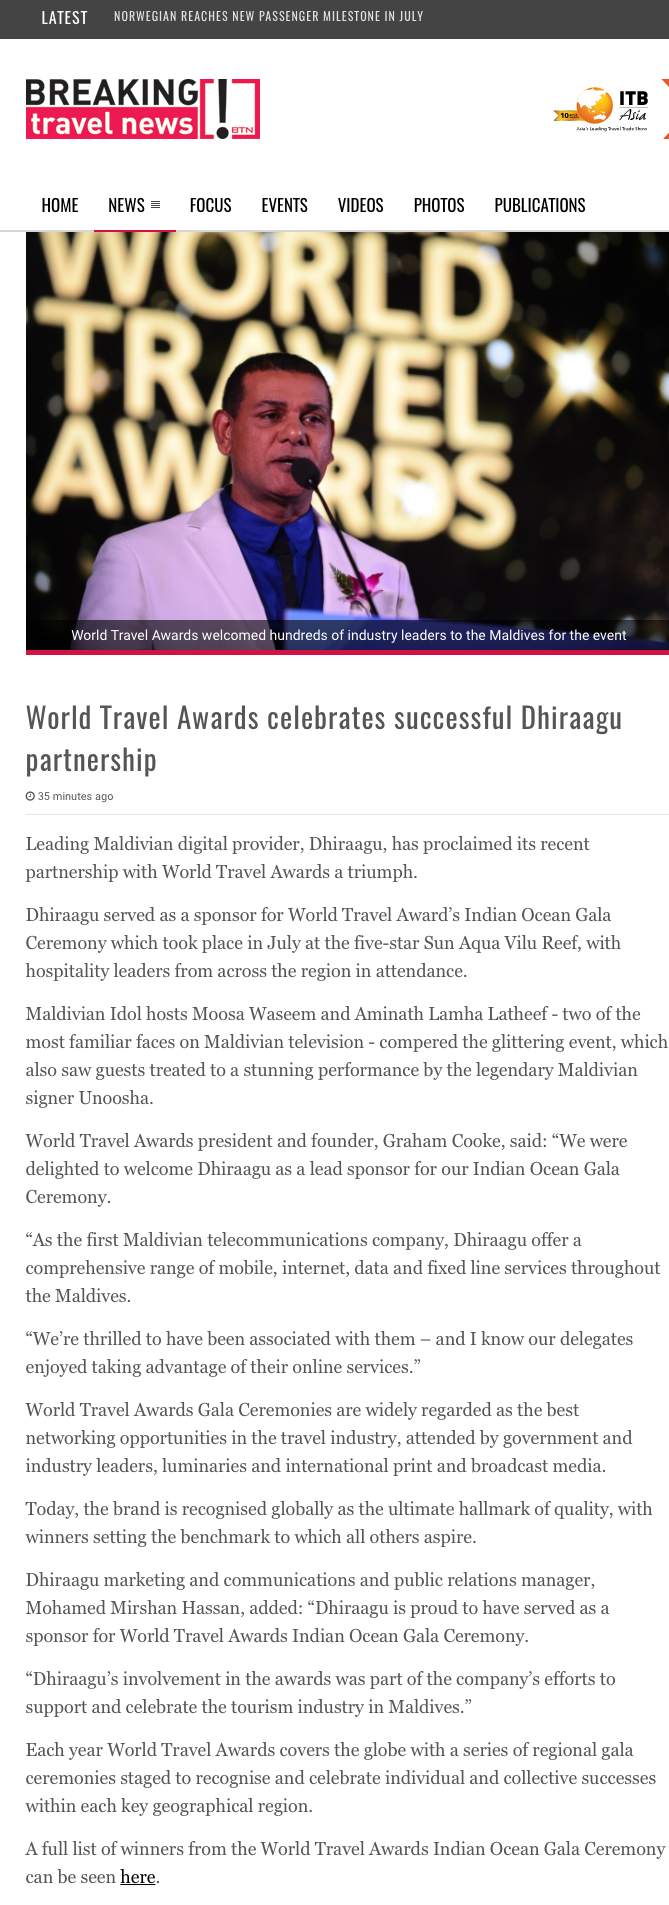 World Travel Awards celebrates successful Dhiraagu partnership